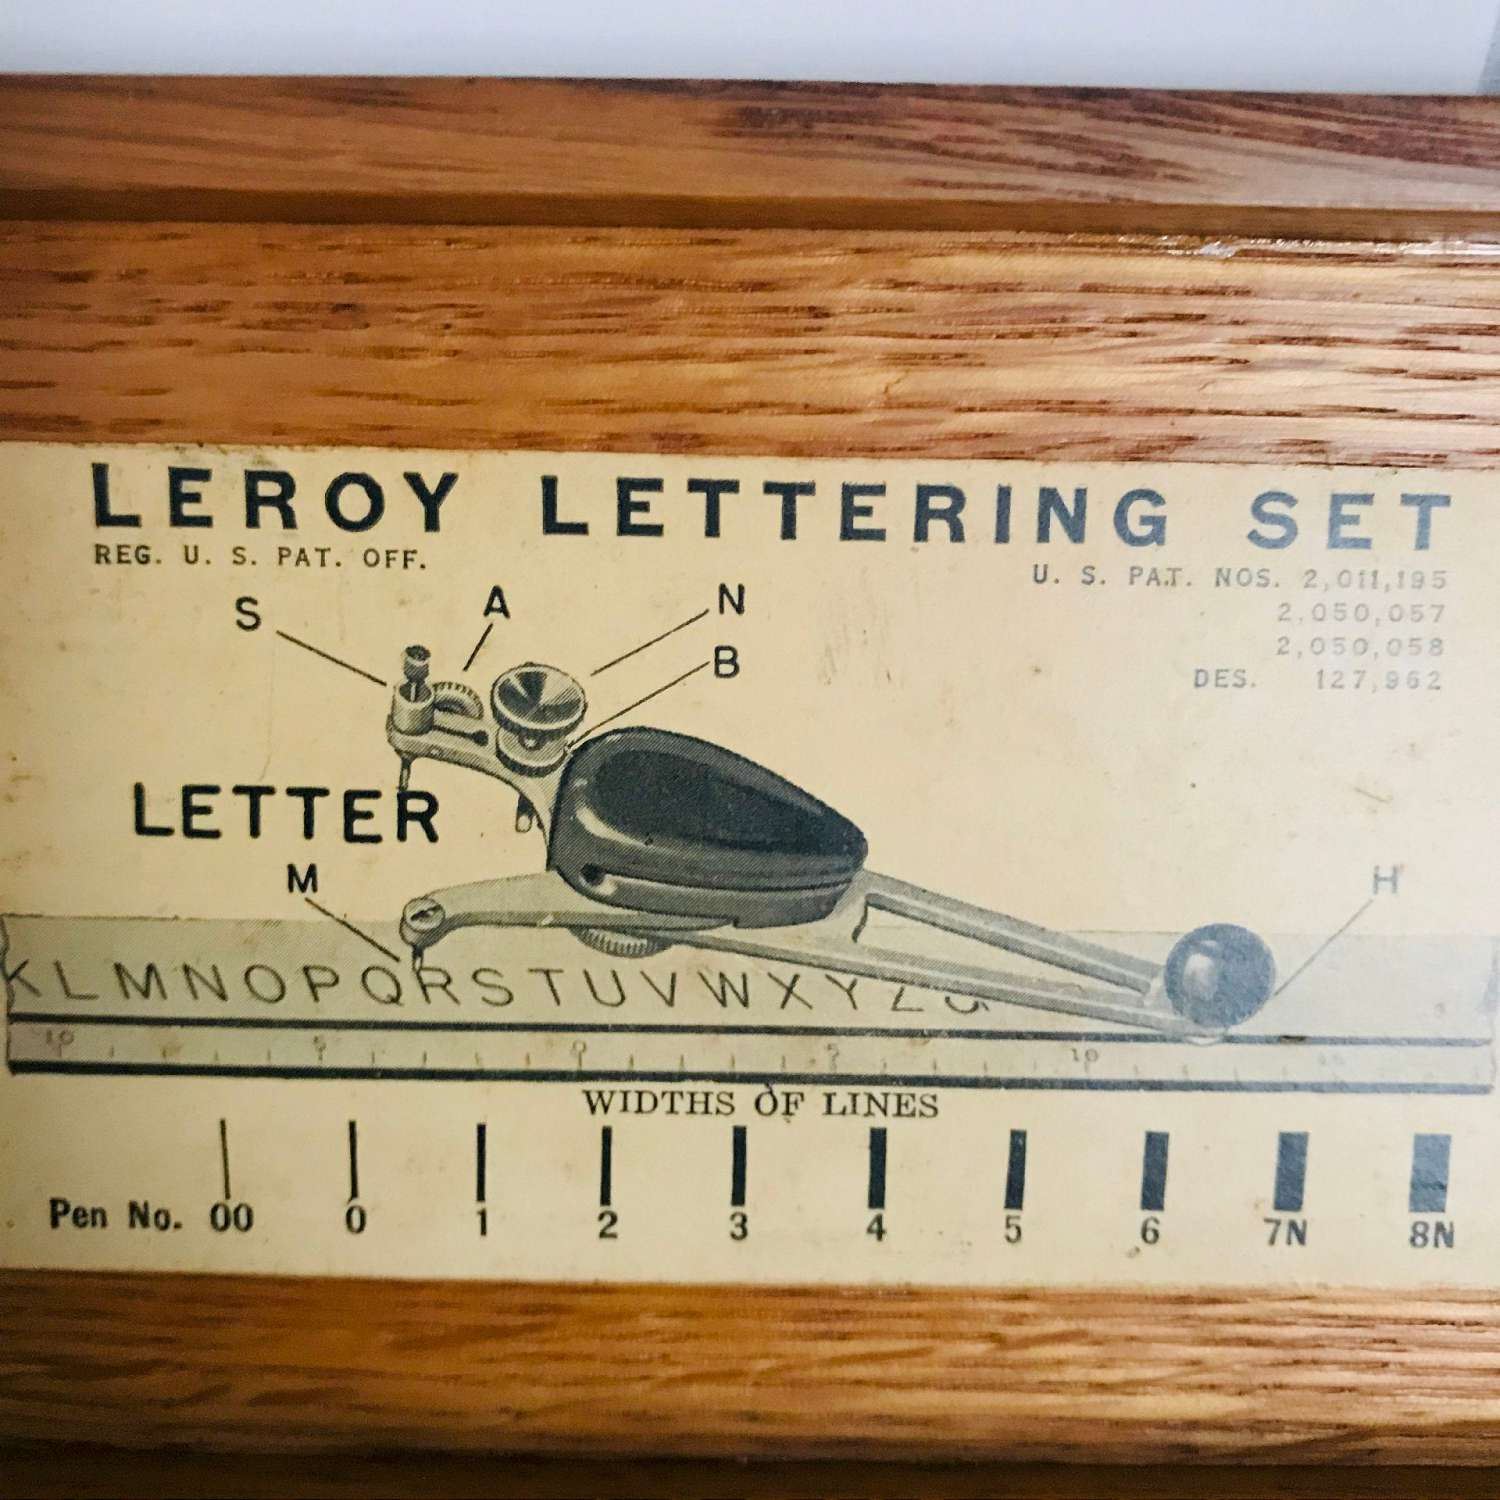 Testing this vintage Leroy Lettering Set